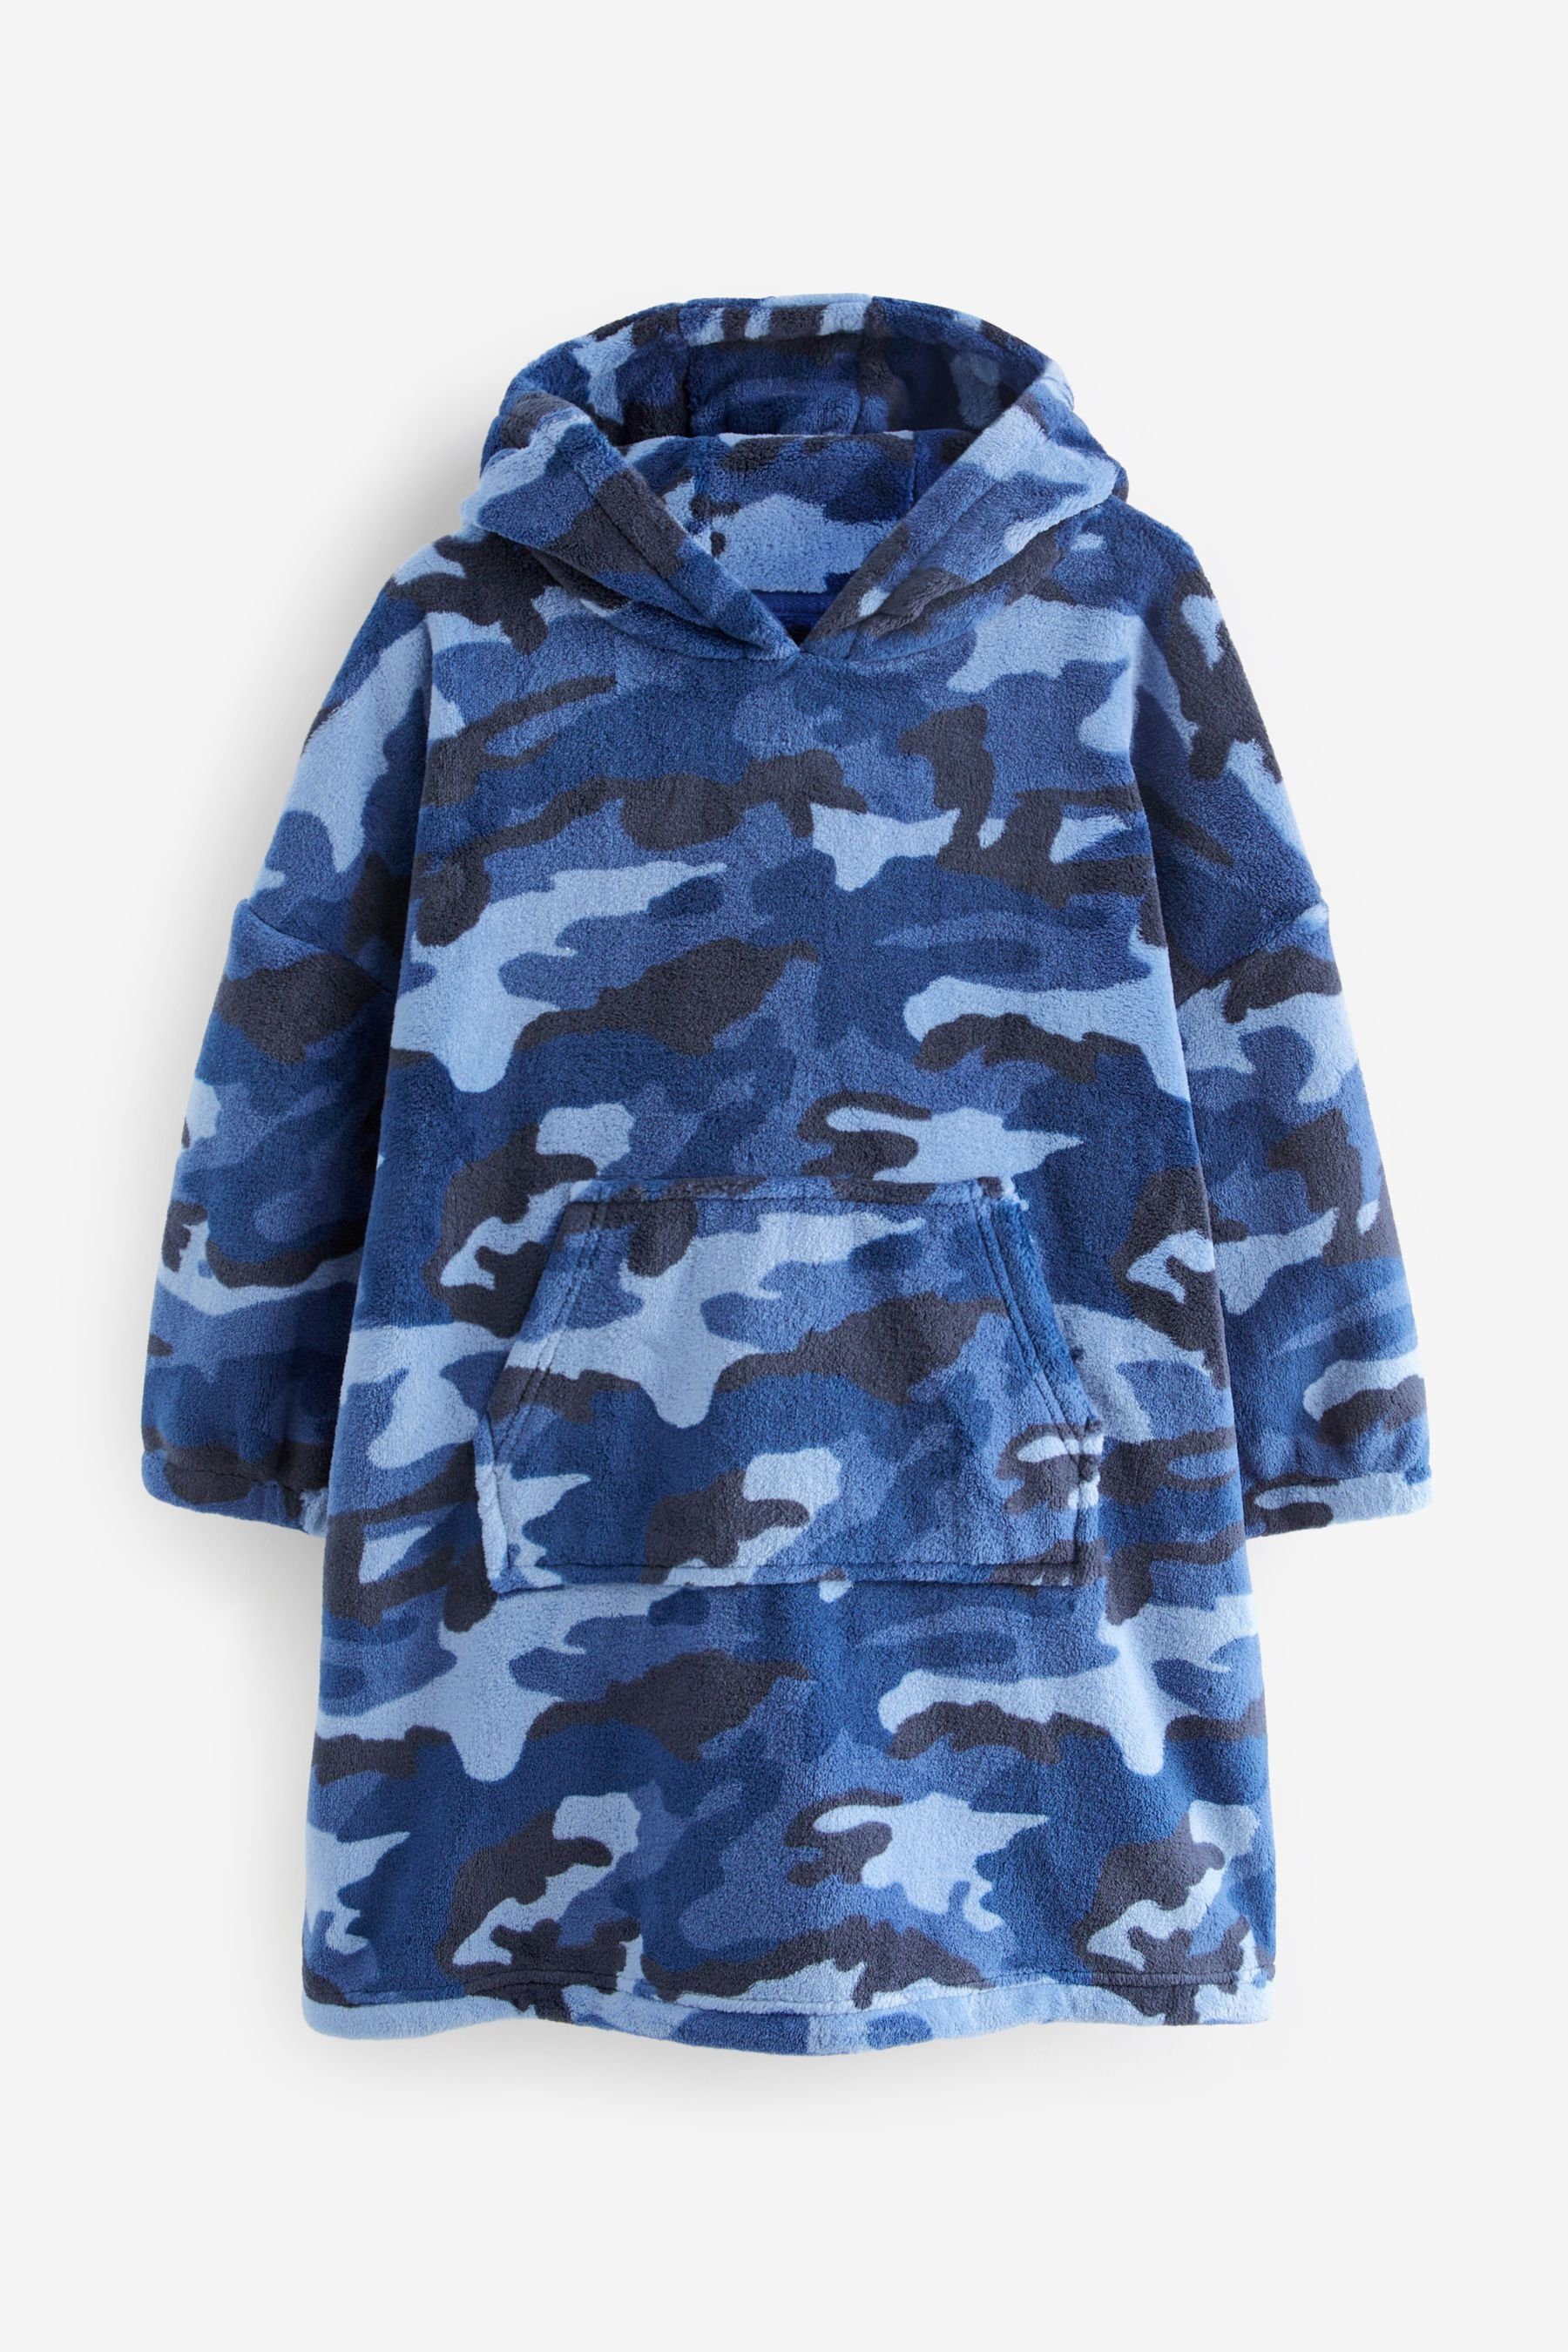 Next Kinderbademantel Decke mit Kapuze, Polyester (recycelt), Polyester Navy Blue Camouflage